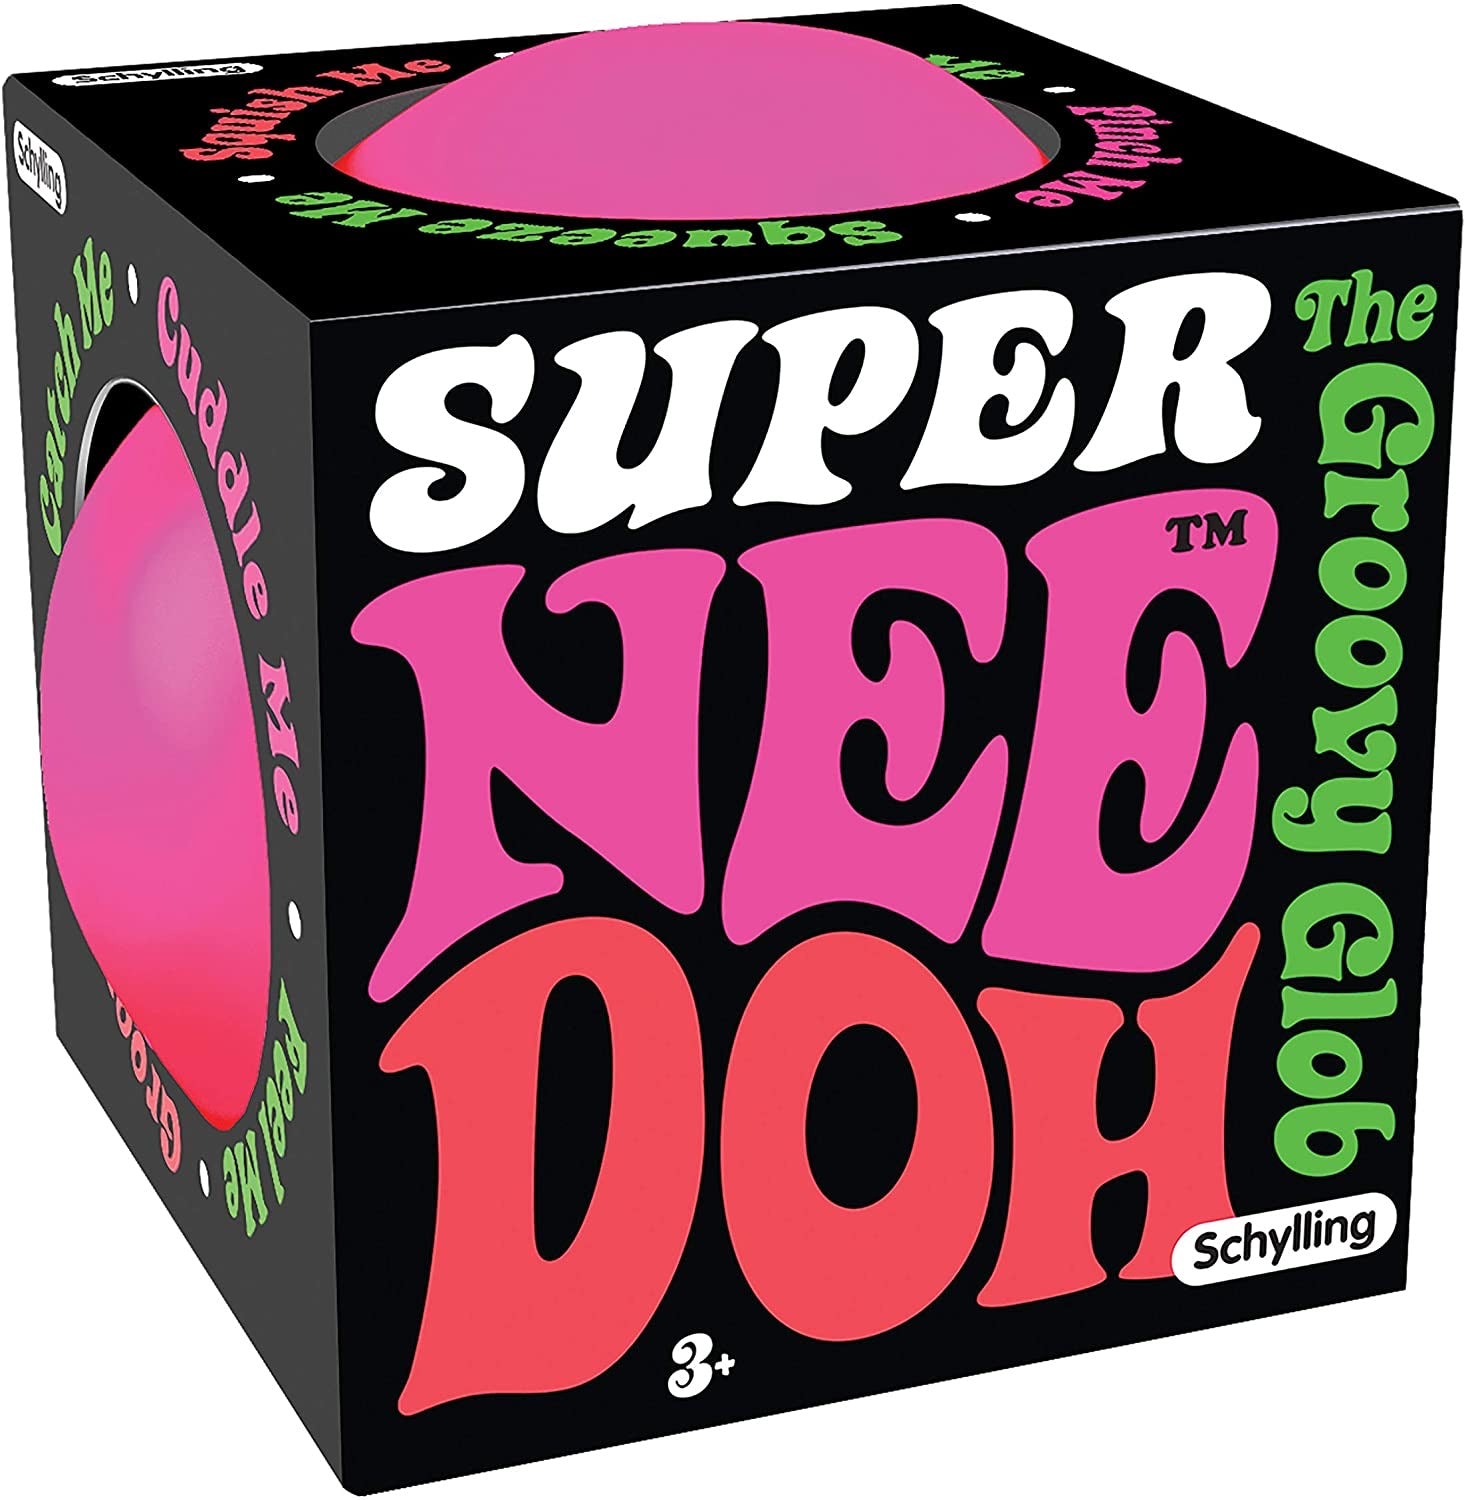 Super Nee Doh by Schylling #SPND